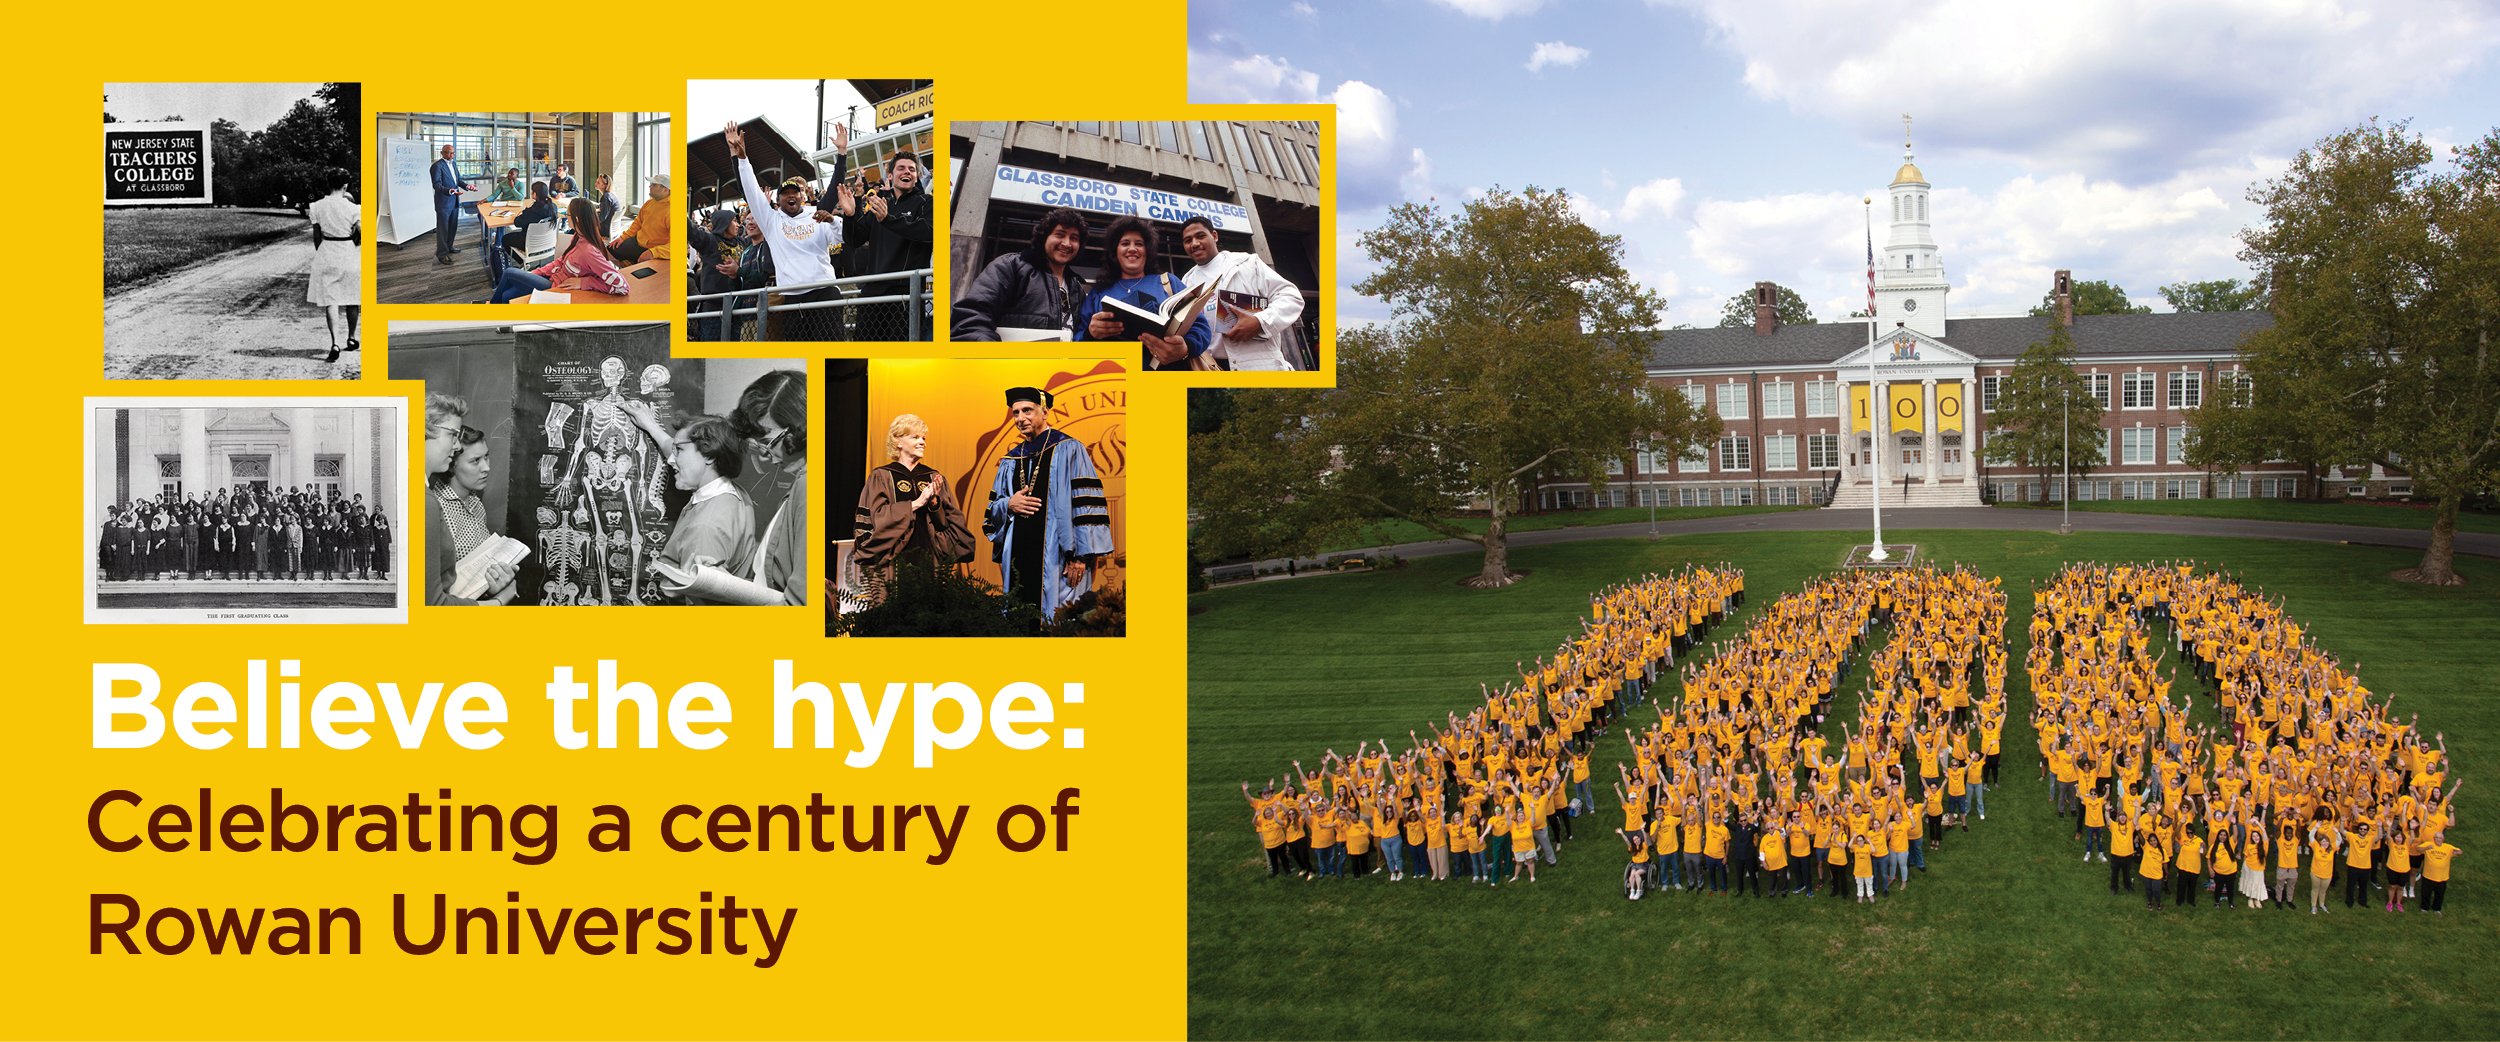 Believe the hype: Celebrating a century of Rowan University